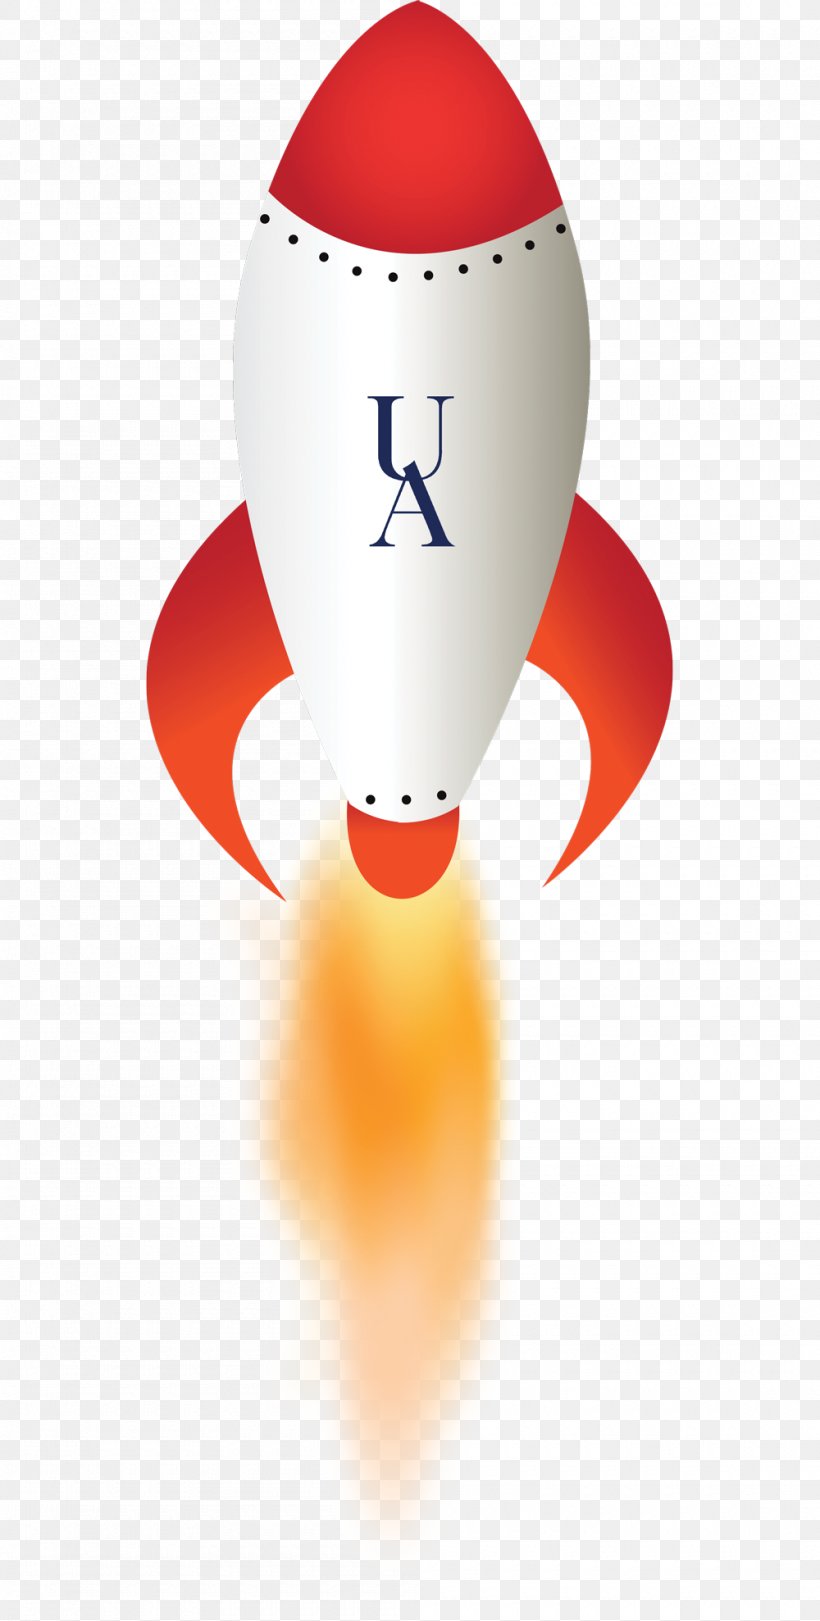 Rocket Clip Art, PNG, 1000x1977px, Rocket, Vehicle Download Free